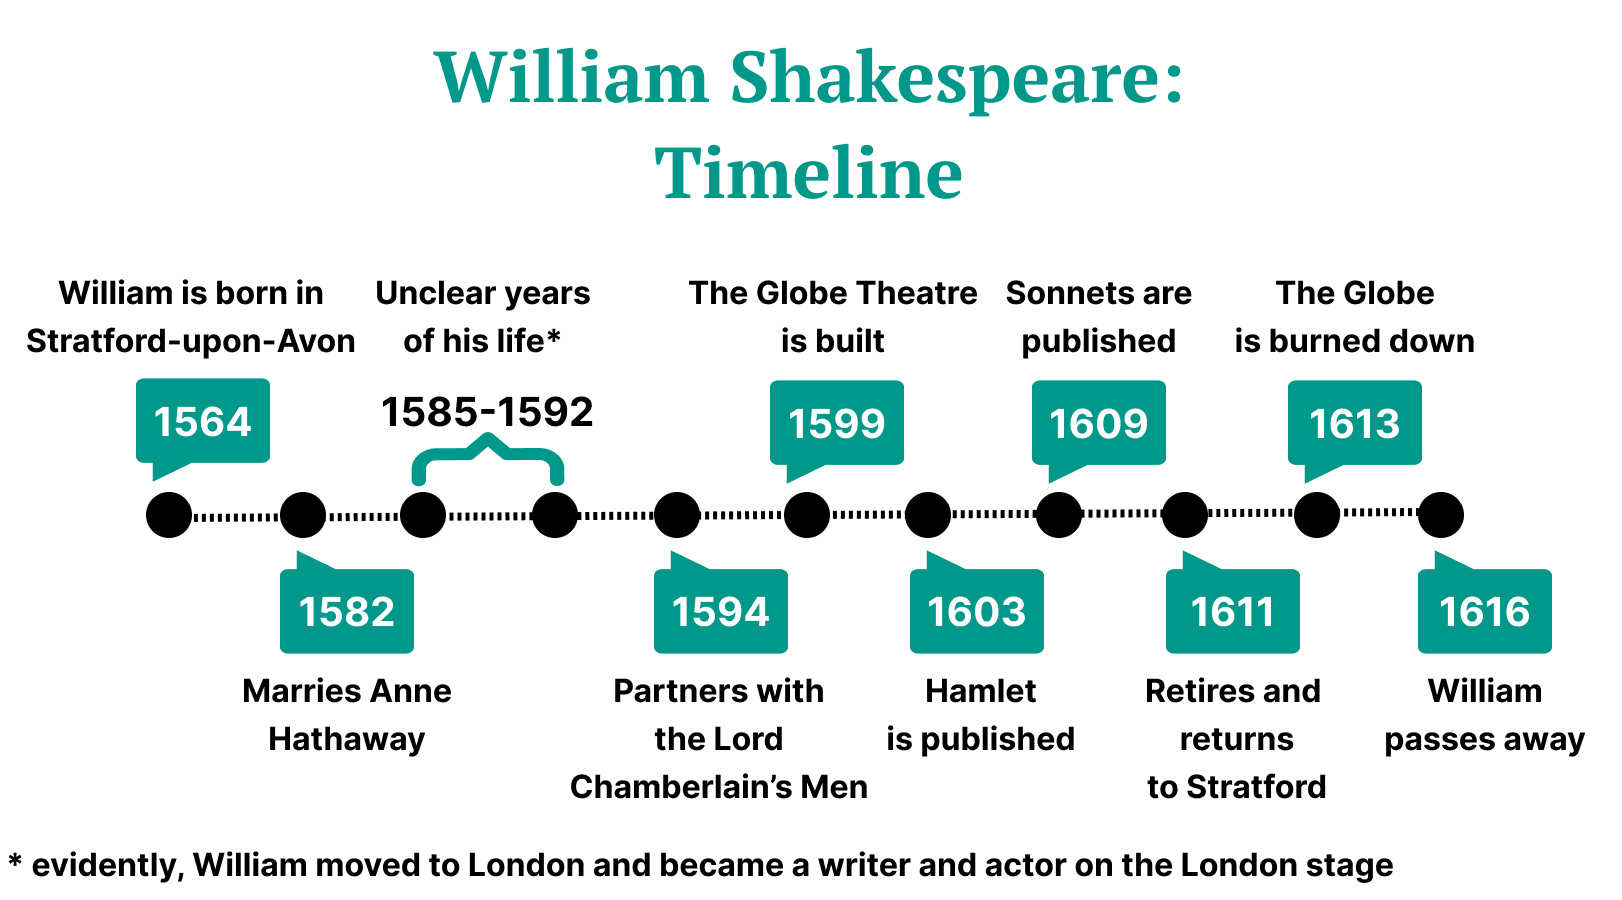 summary of william shakespeare biography